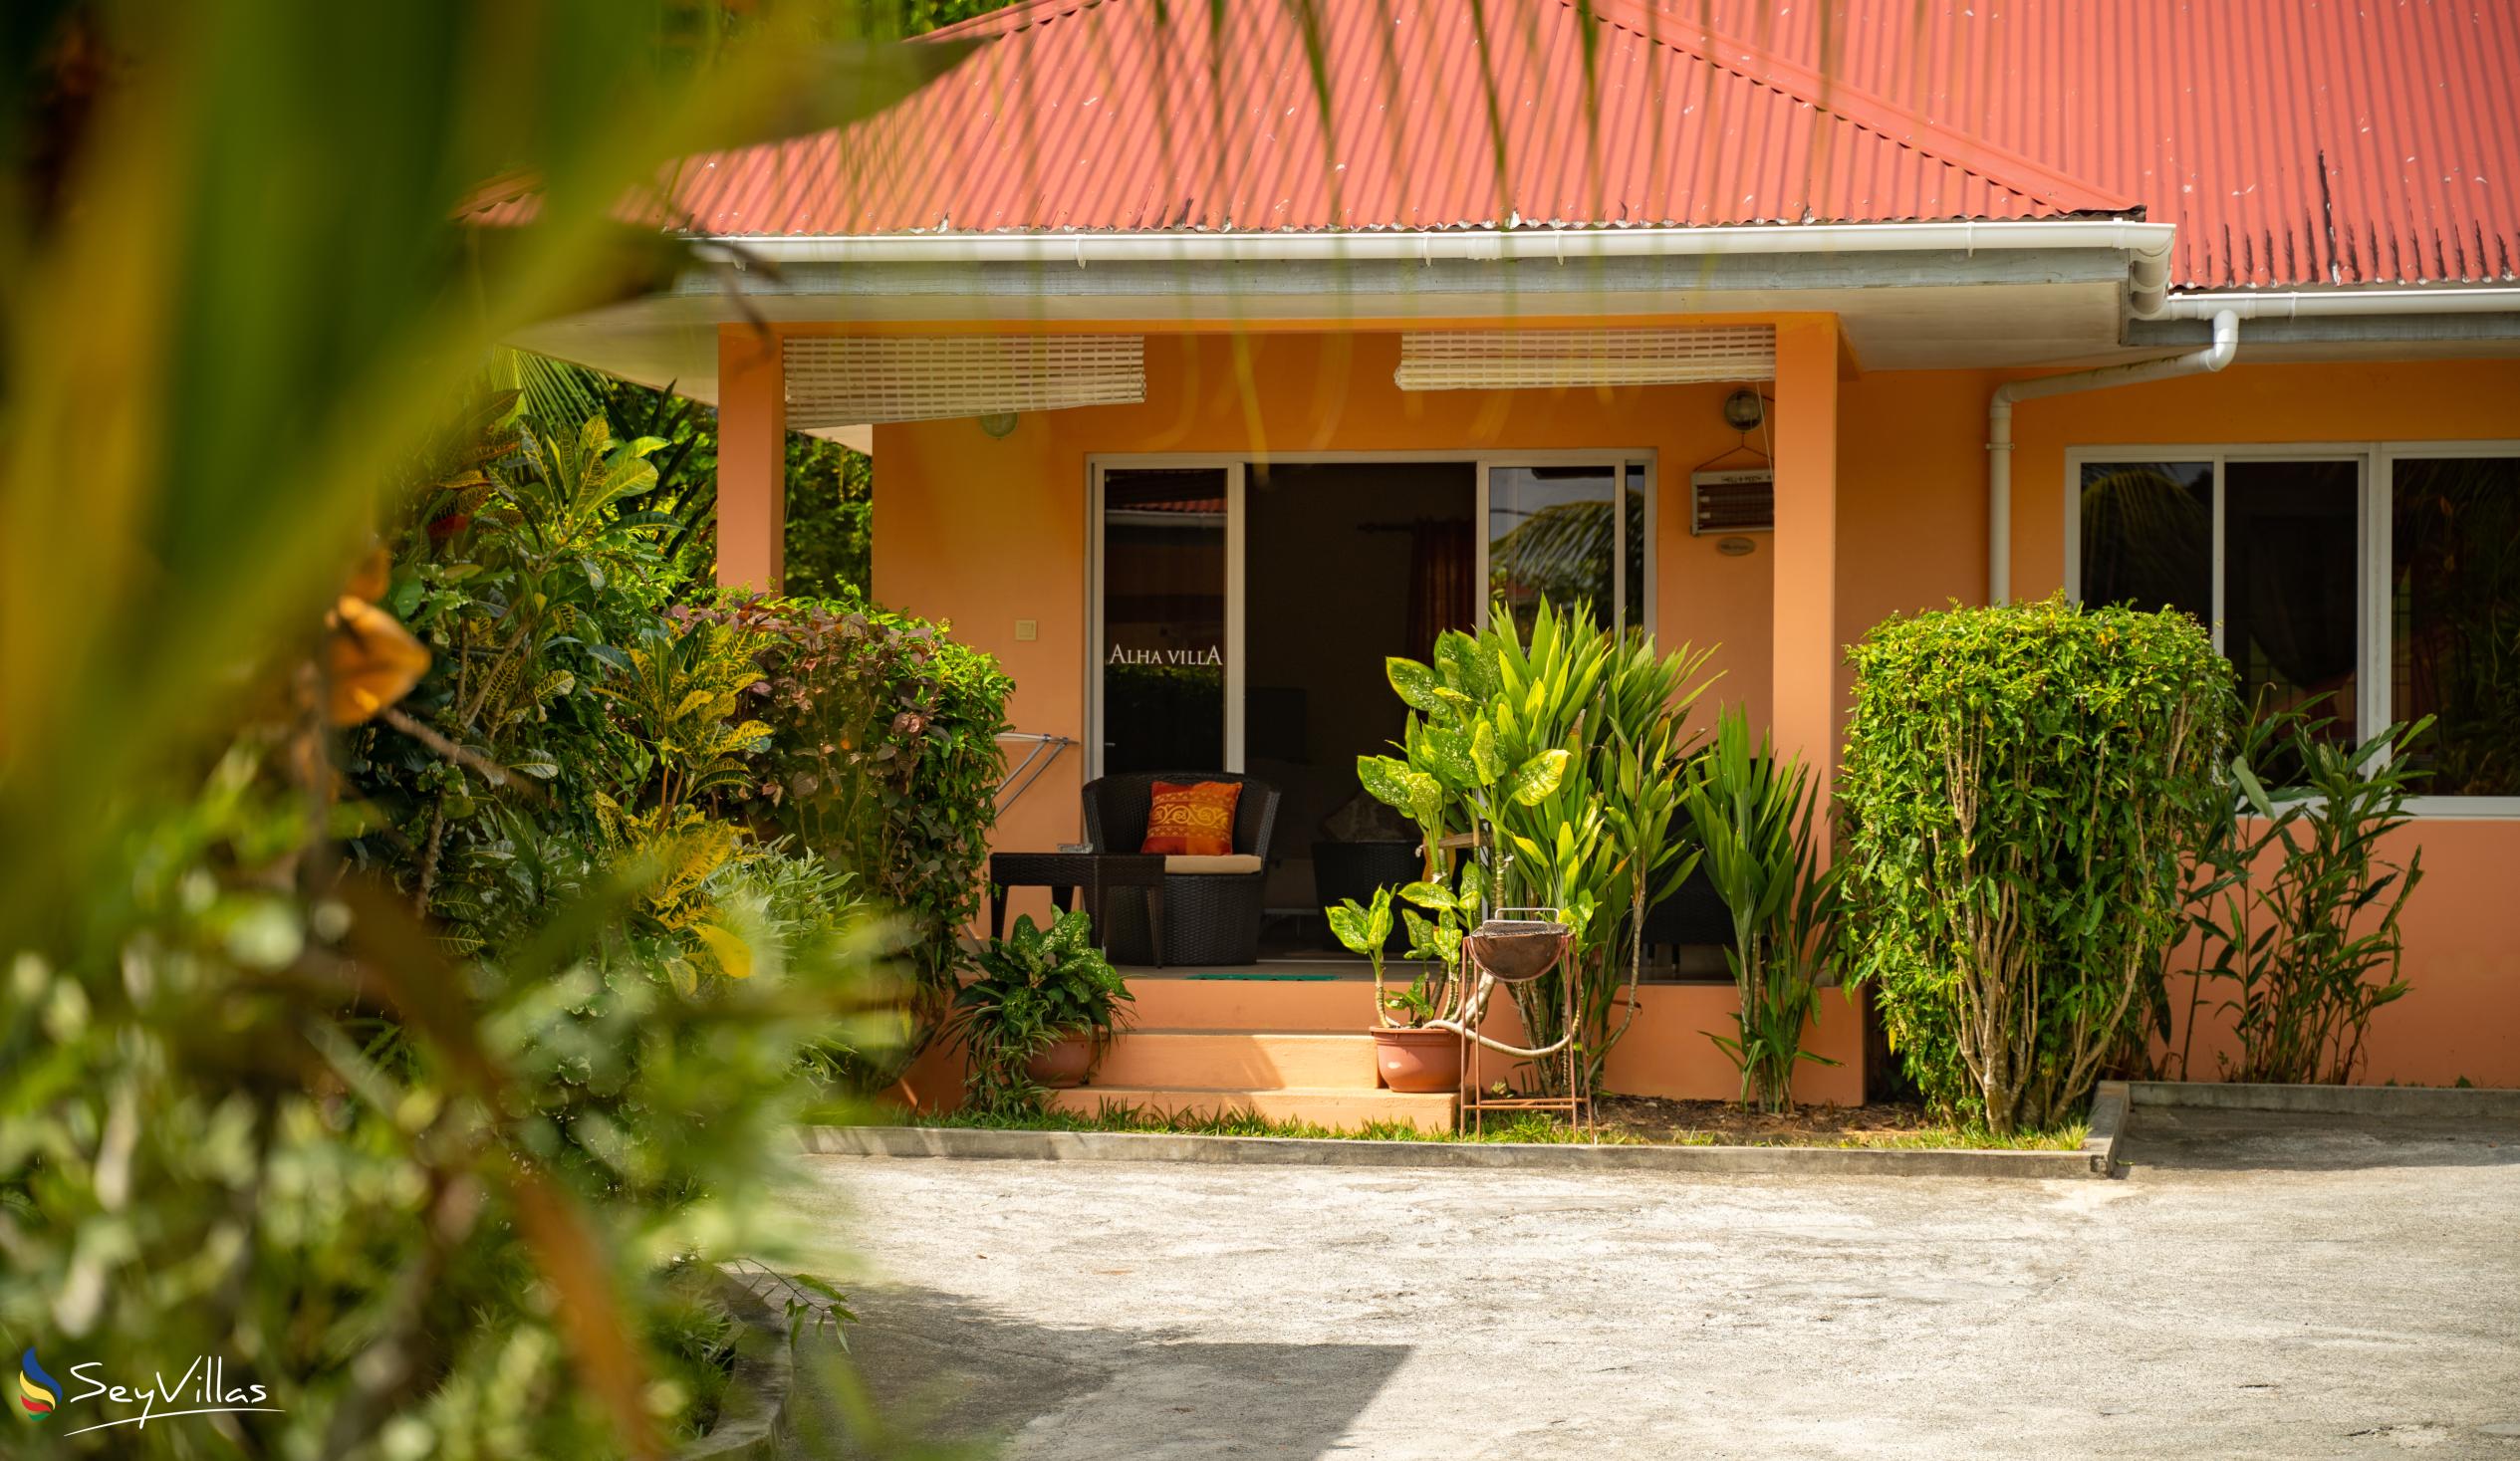 Photo 15: Alha Villa - Outdoor area - Mahé (Seychelles)